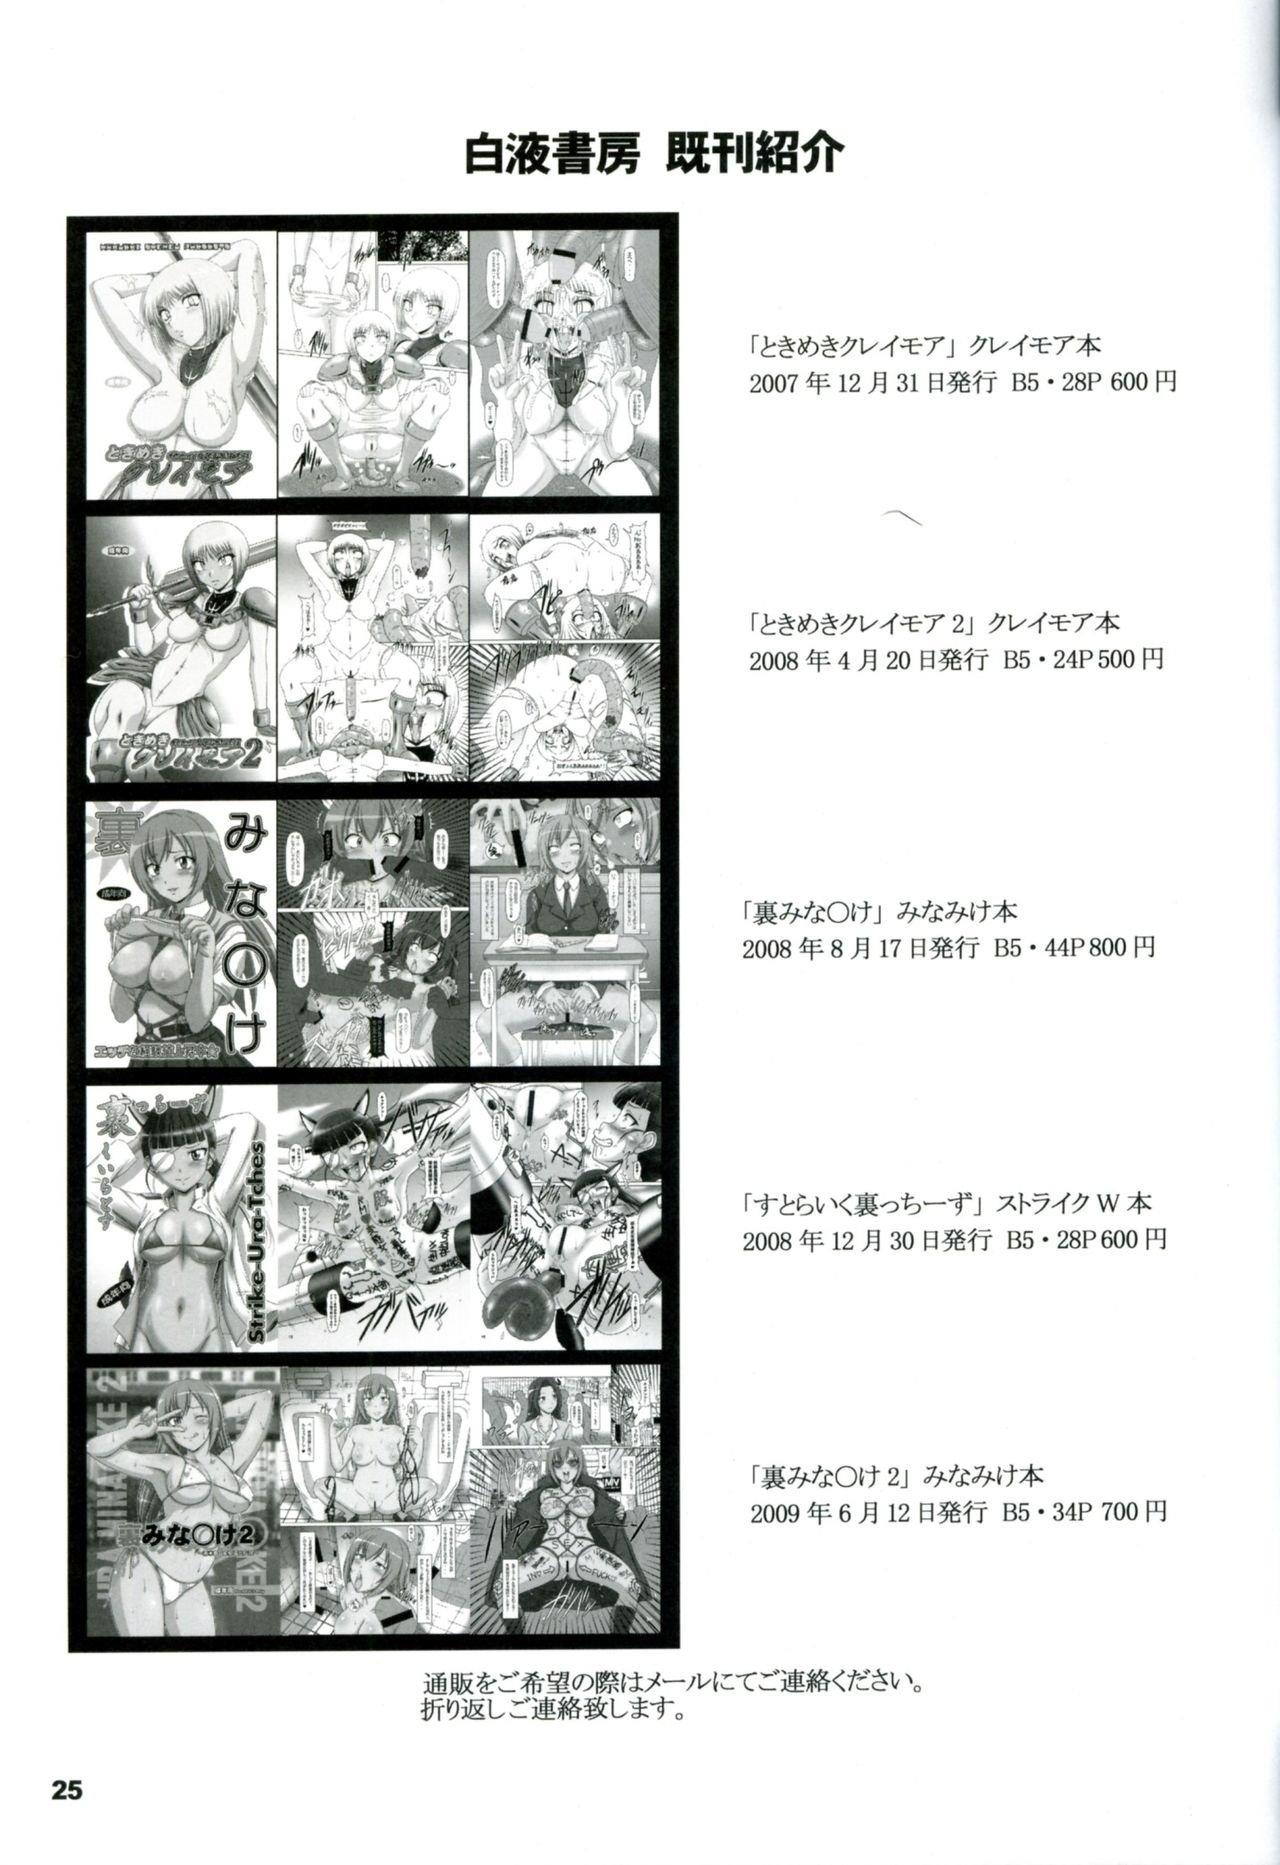 Gostoso Kuroiro Jikan - Black Time - K-on Muscles - Page 24